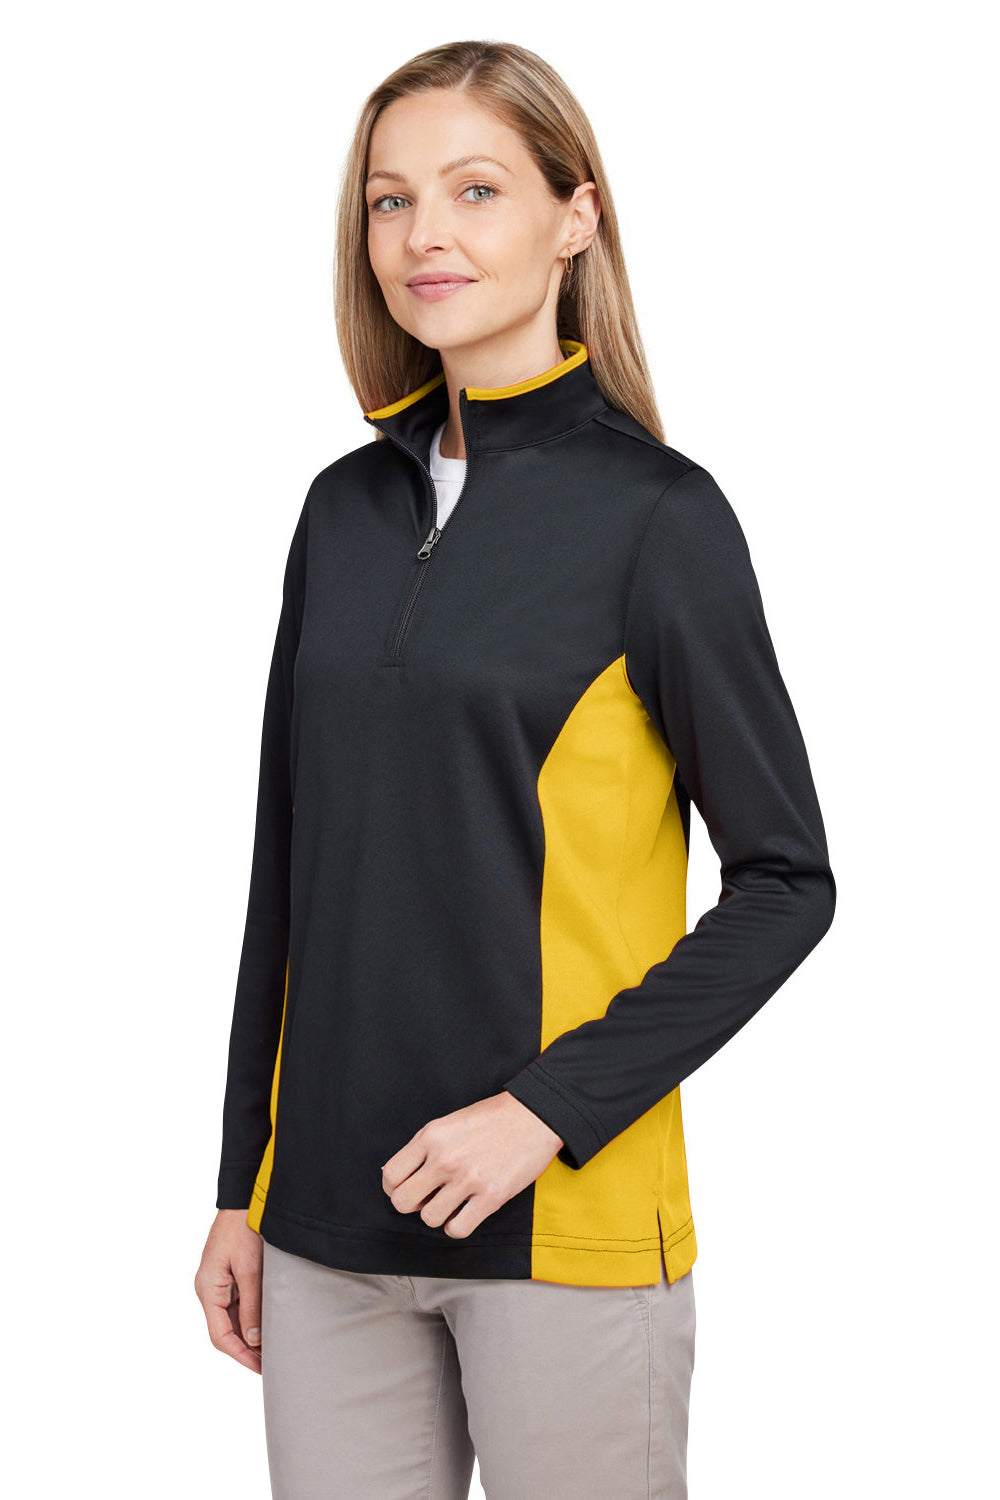 Harriton M786W Womens Flash Performance Moisture Wicking Colorblock 1/4 Zip Sweatshirt Black/Sunray Yellow 3Q